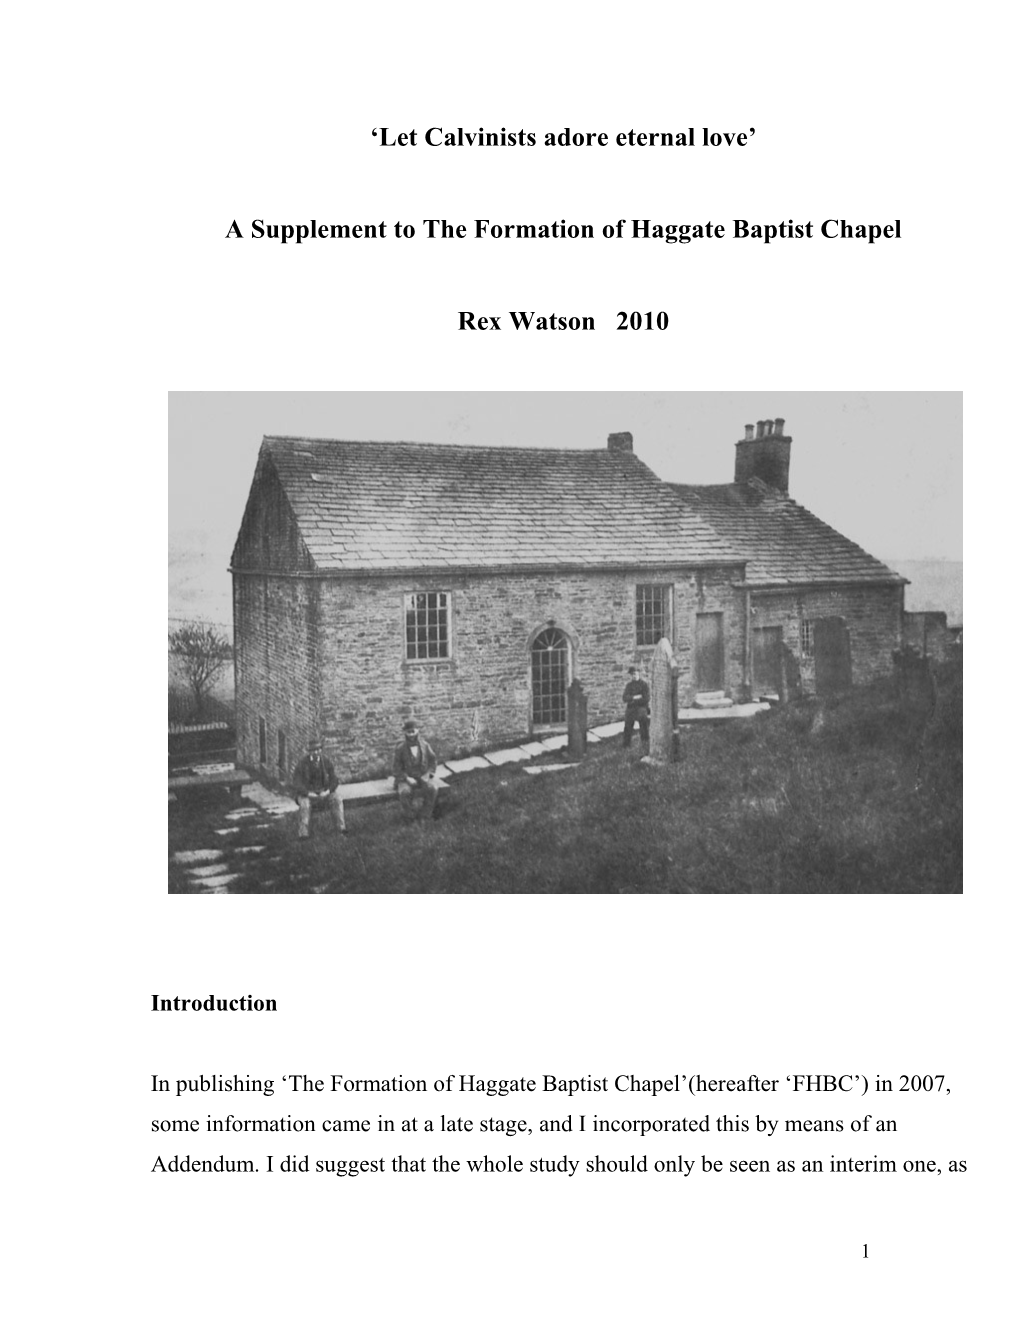 Haggate Baptist Chapel Supplement